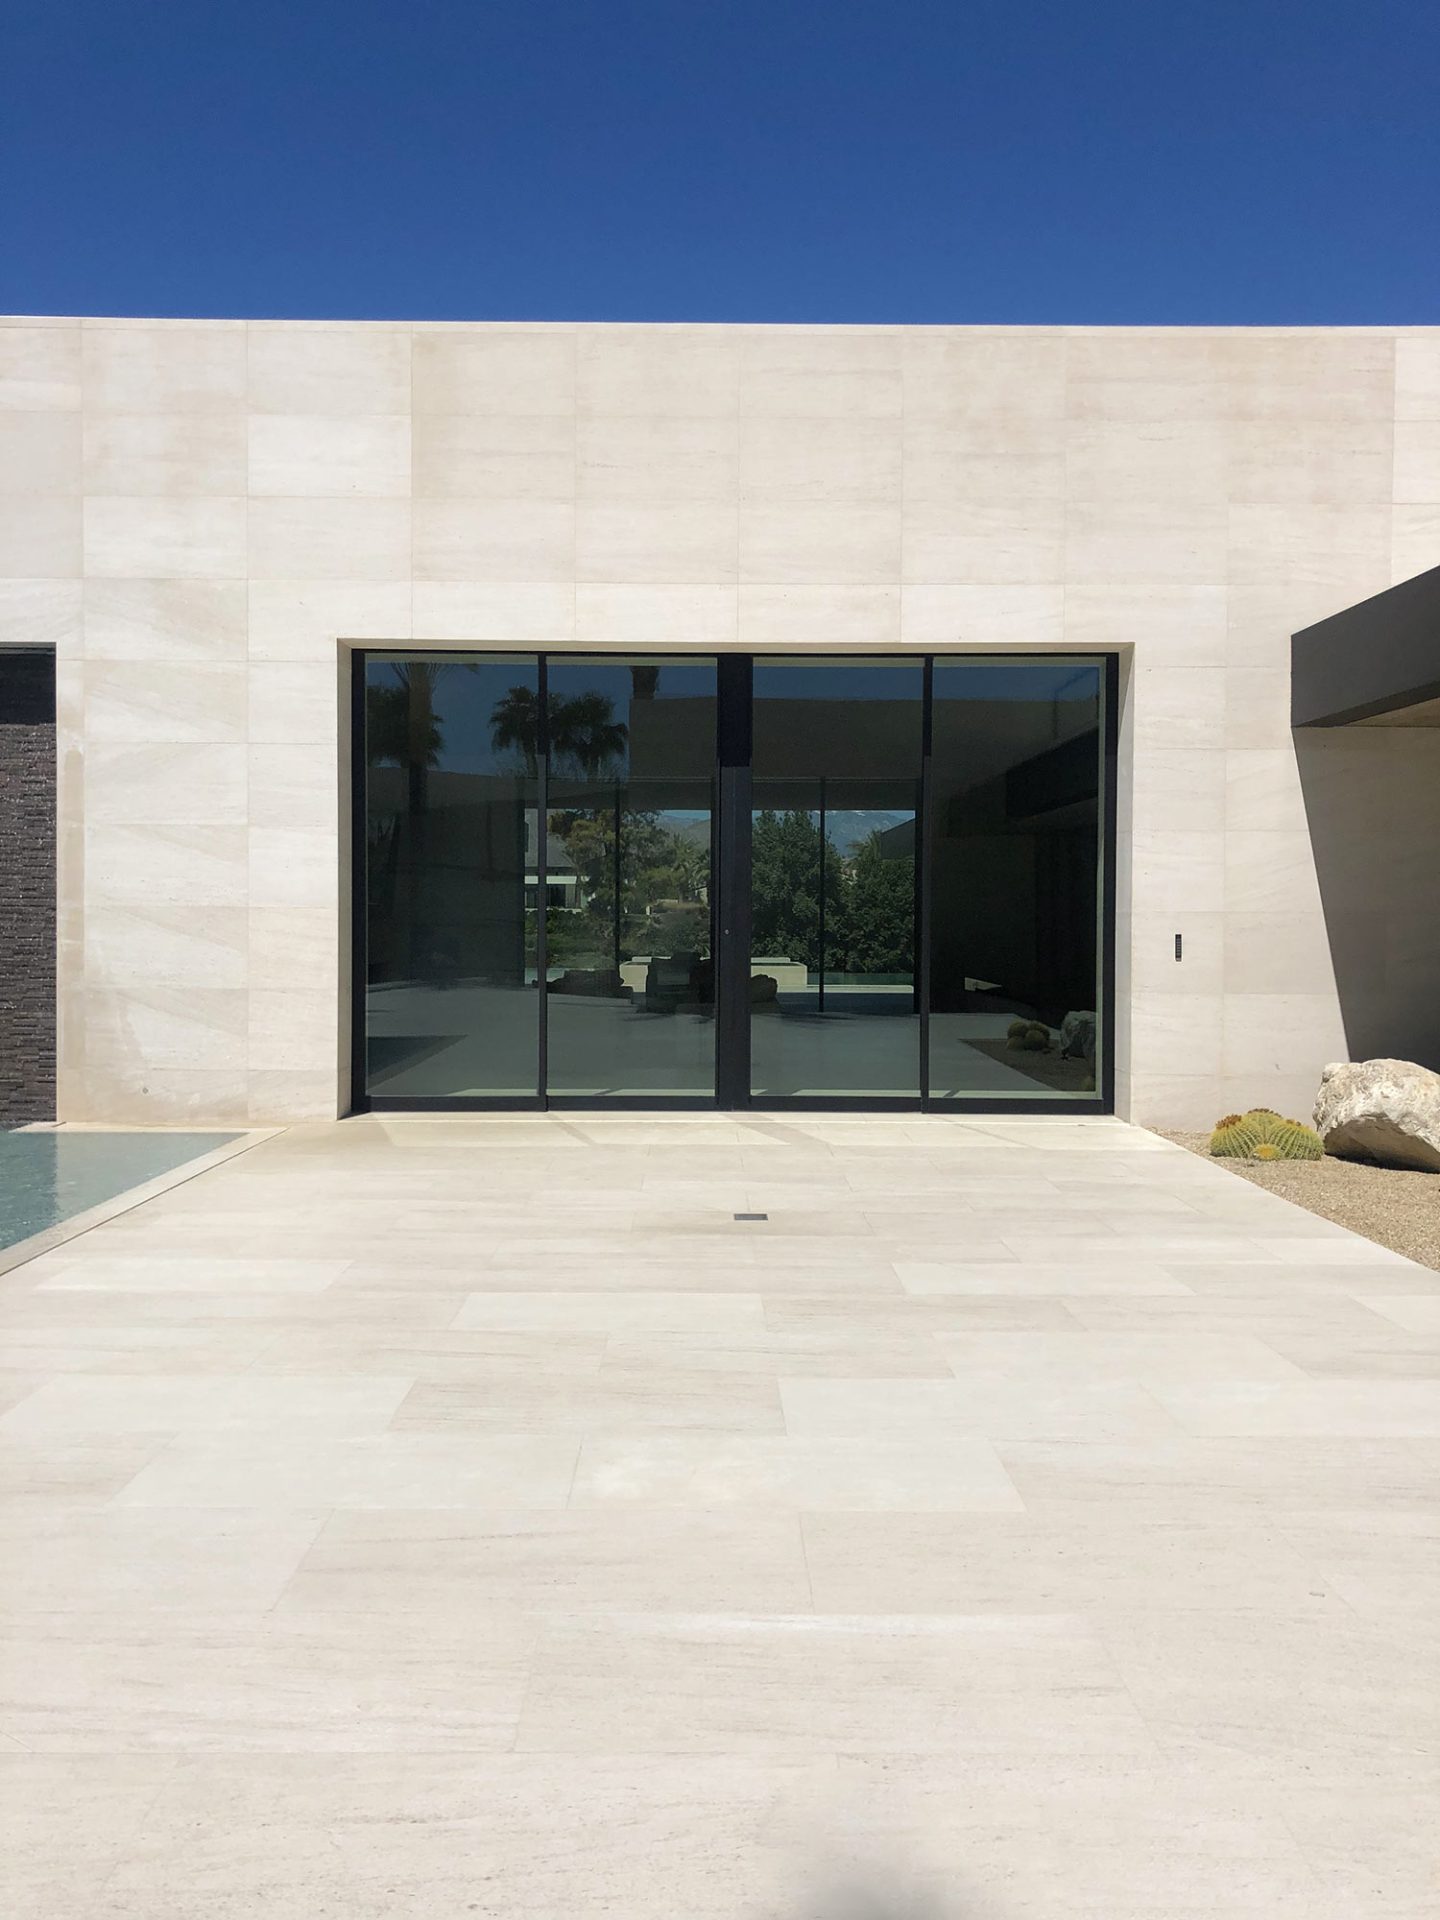 Mocca Cream Medium limestone tiles featured in exterior entryway